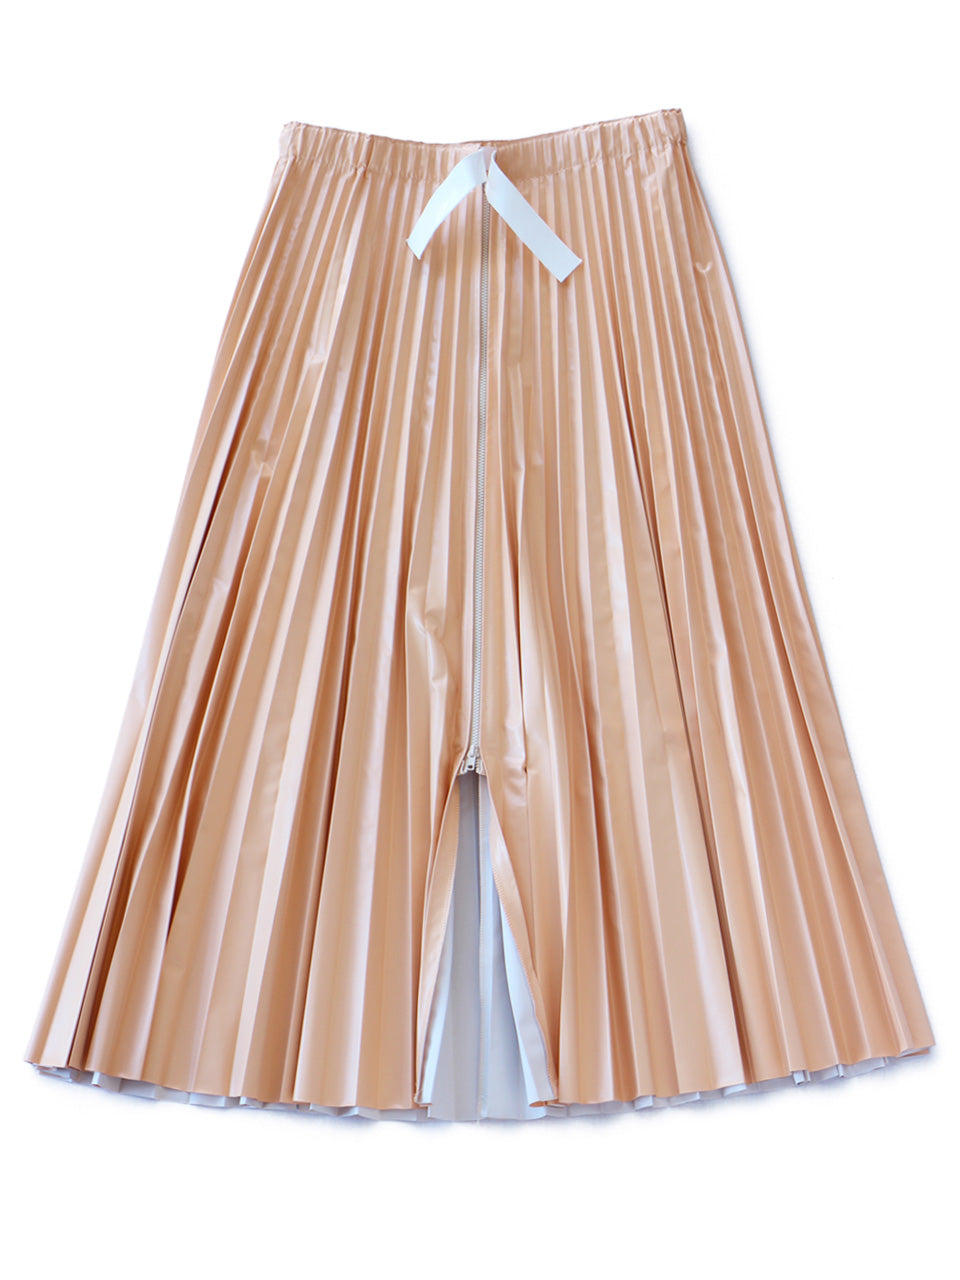 Laminate Skirt (beige)